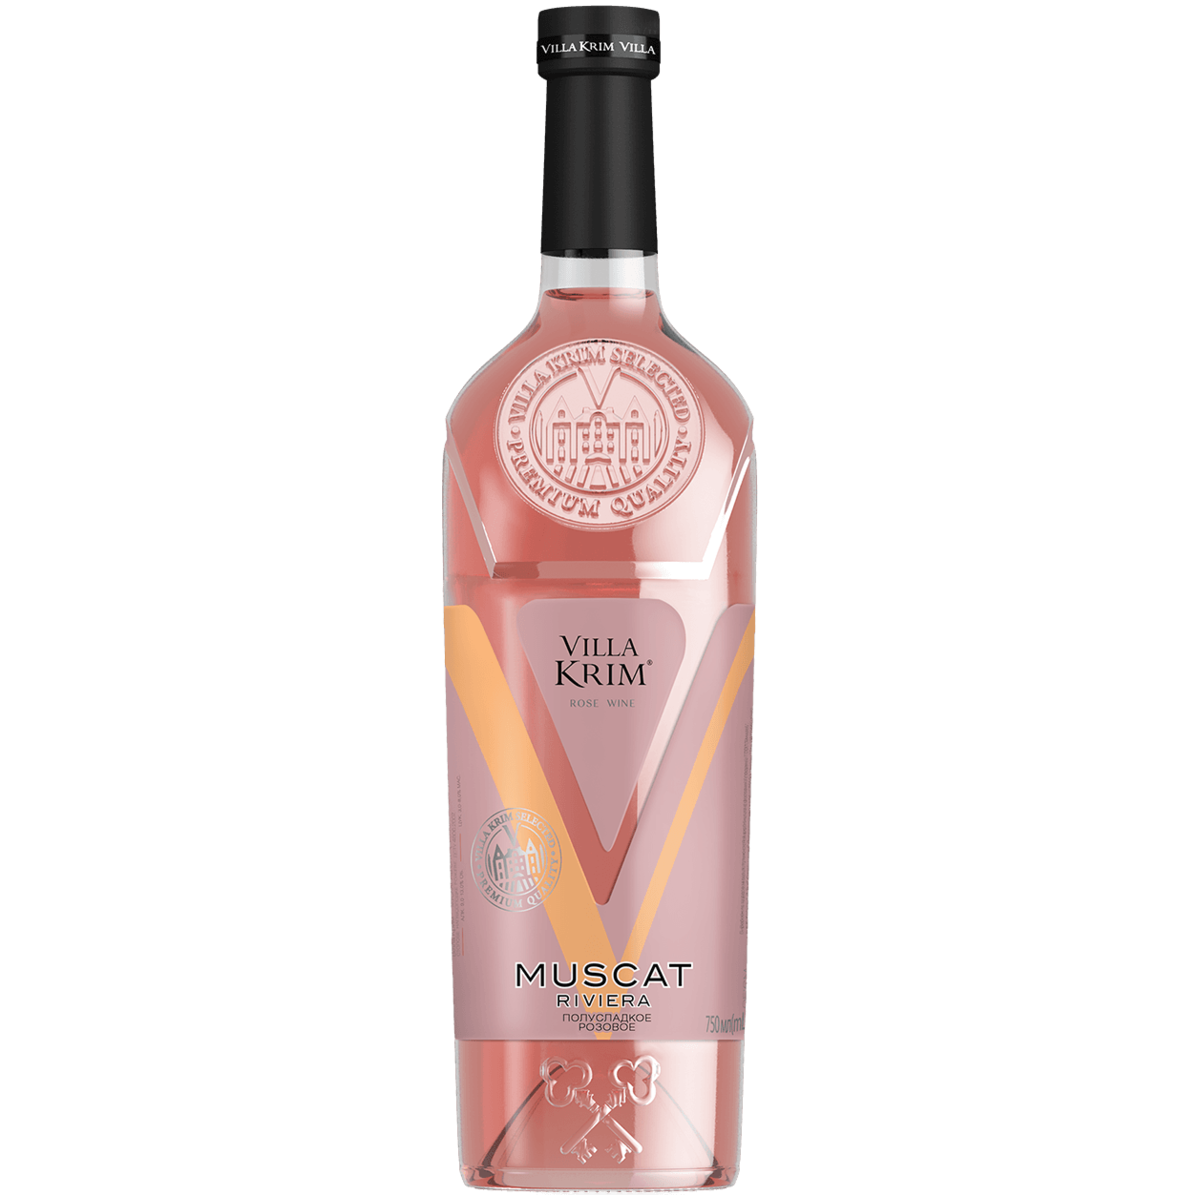 Вилла крым розовое. Вино Villa krim "Muscat Riviera" Rose Wine. Вилла Крым Мускат розовый. Вино Villa krim Muscat Riviera 0.75 л. Вино вилла Крым Мускат.